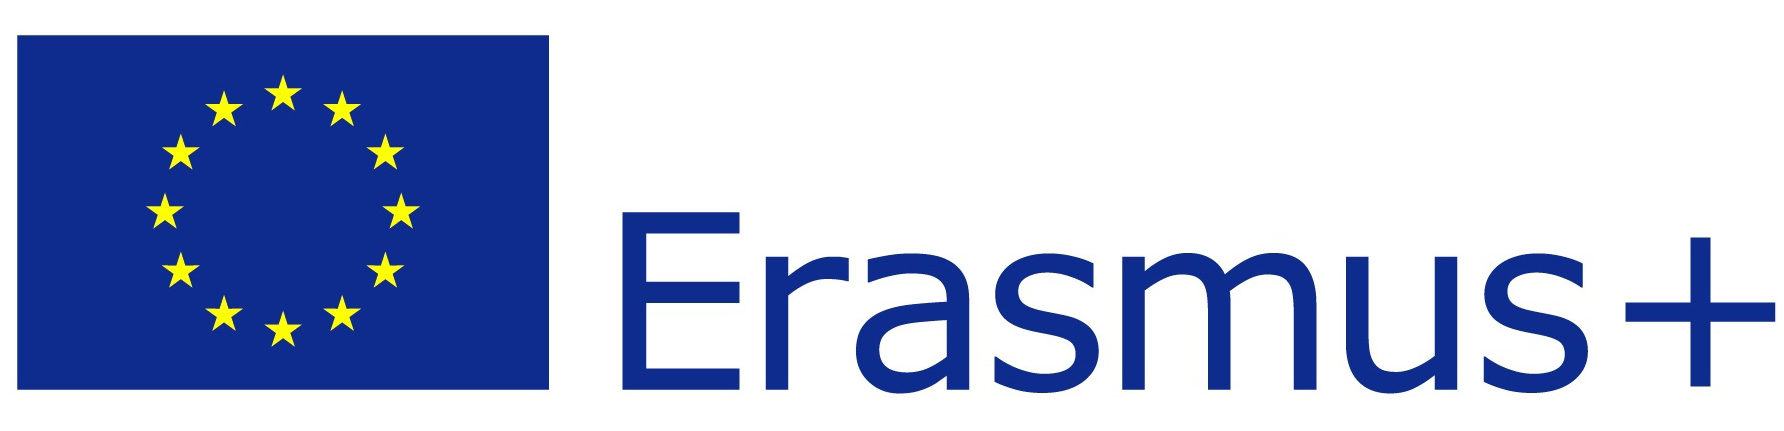 ERASMUS logo.jpg